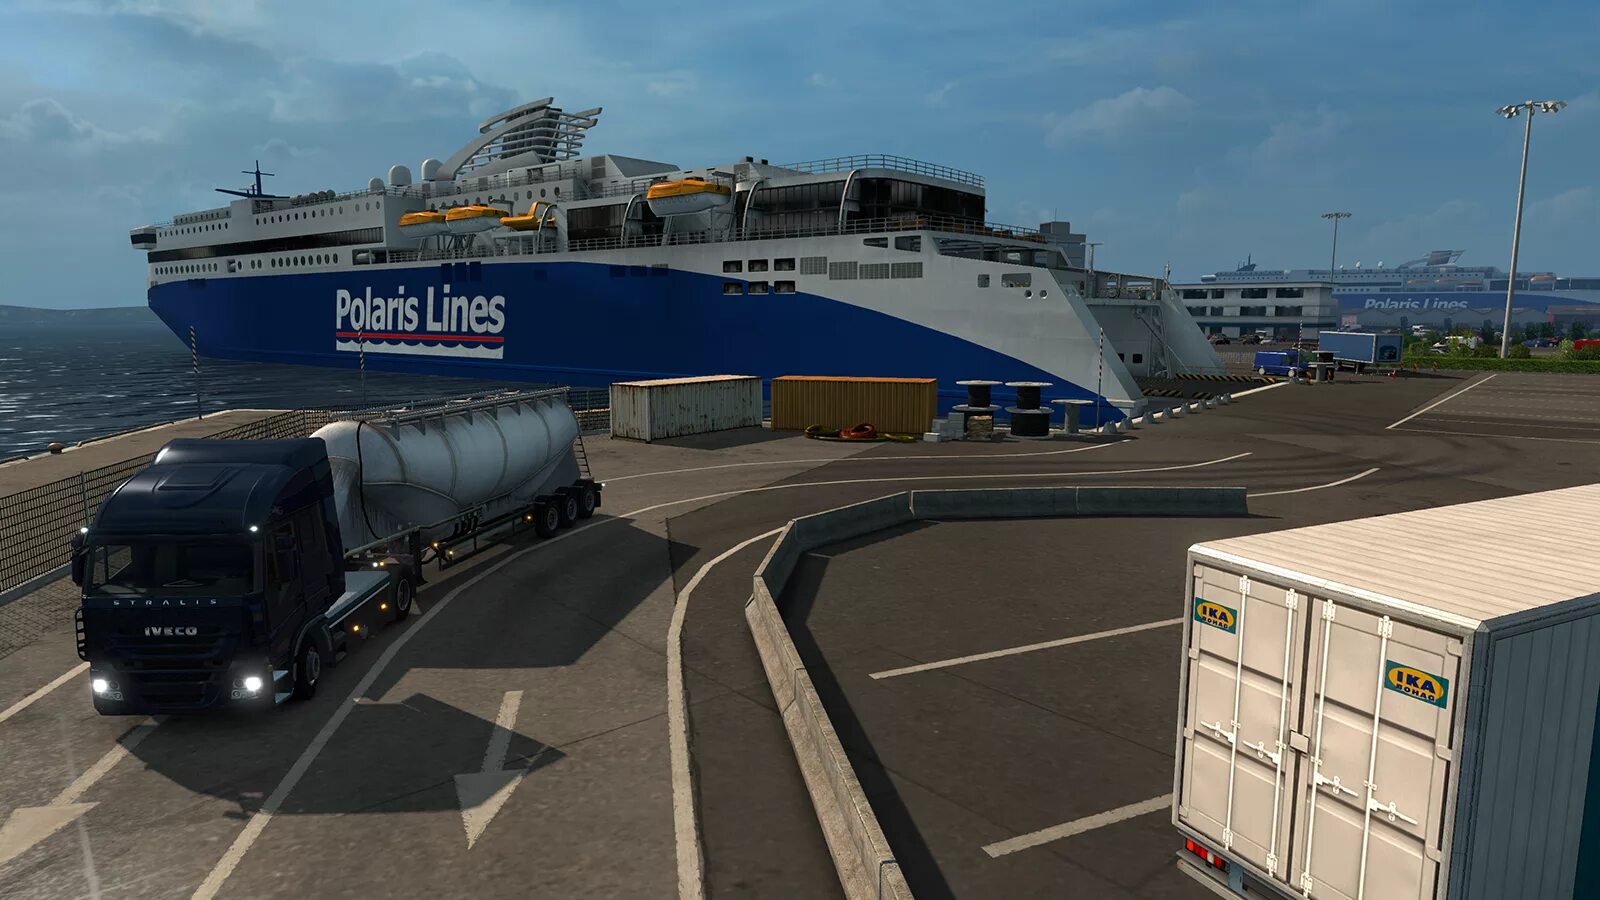 Грузовики на паромах. Скандинавия етс 2. Euro Truck Simulator 2 Скандинавия. Euro Truck Simulator 2 Scandinavia DLC. DLC Scandinavia для ETS 2.